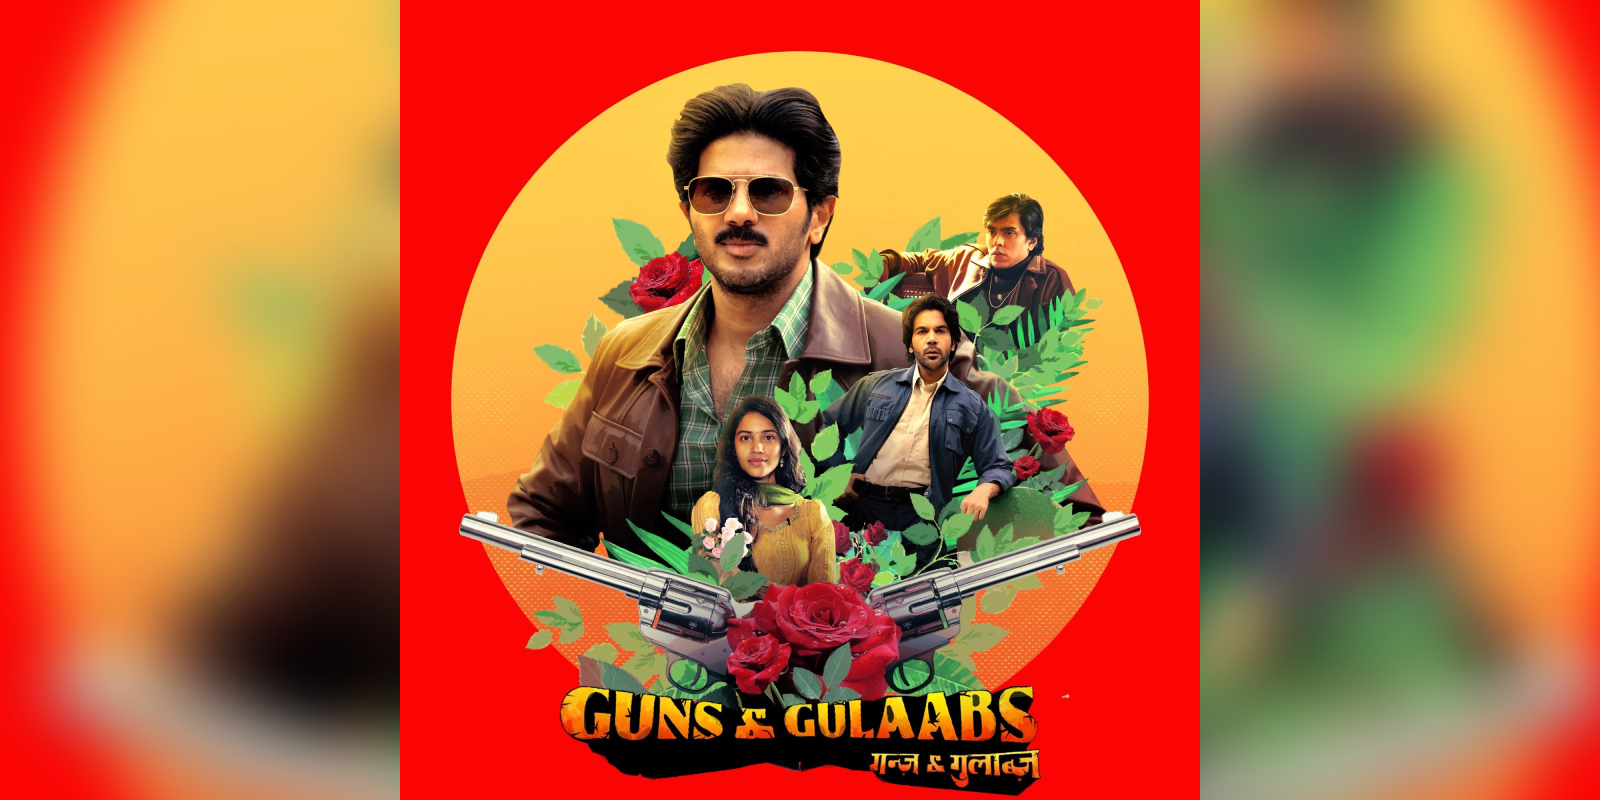 A poster of the web series Guns & Gulaabs